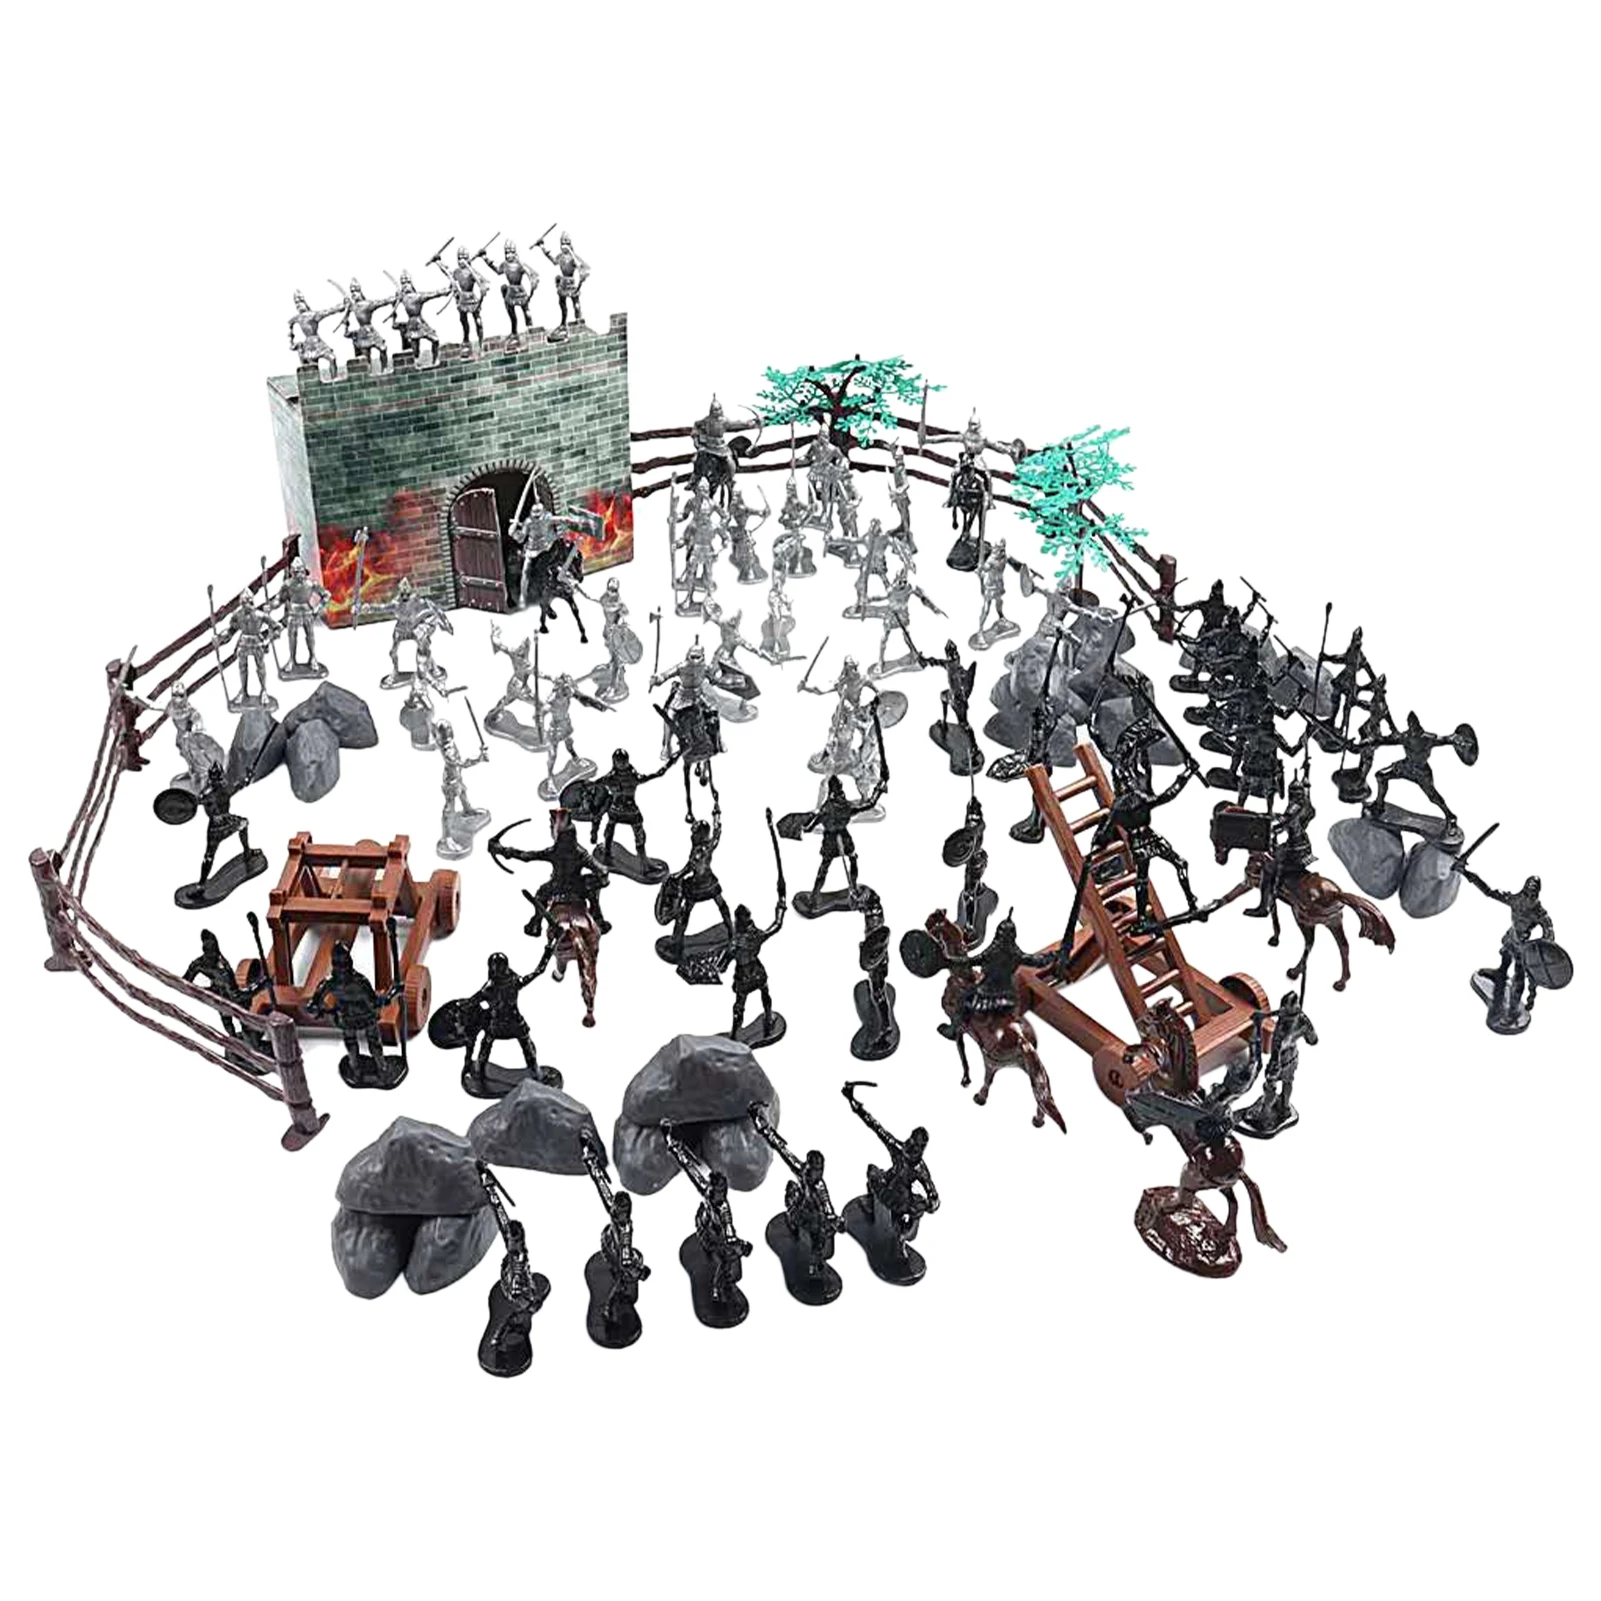 

120pcs Static Kids Toy Ornaments Educational Miniature Castle Model Set DIY Building Siege War Fort Knight Medieval Soldiers